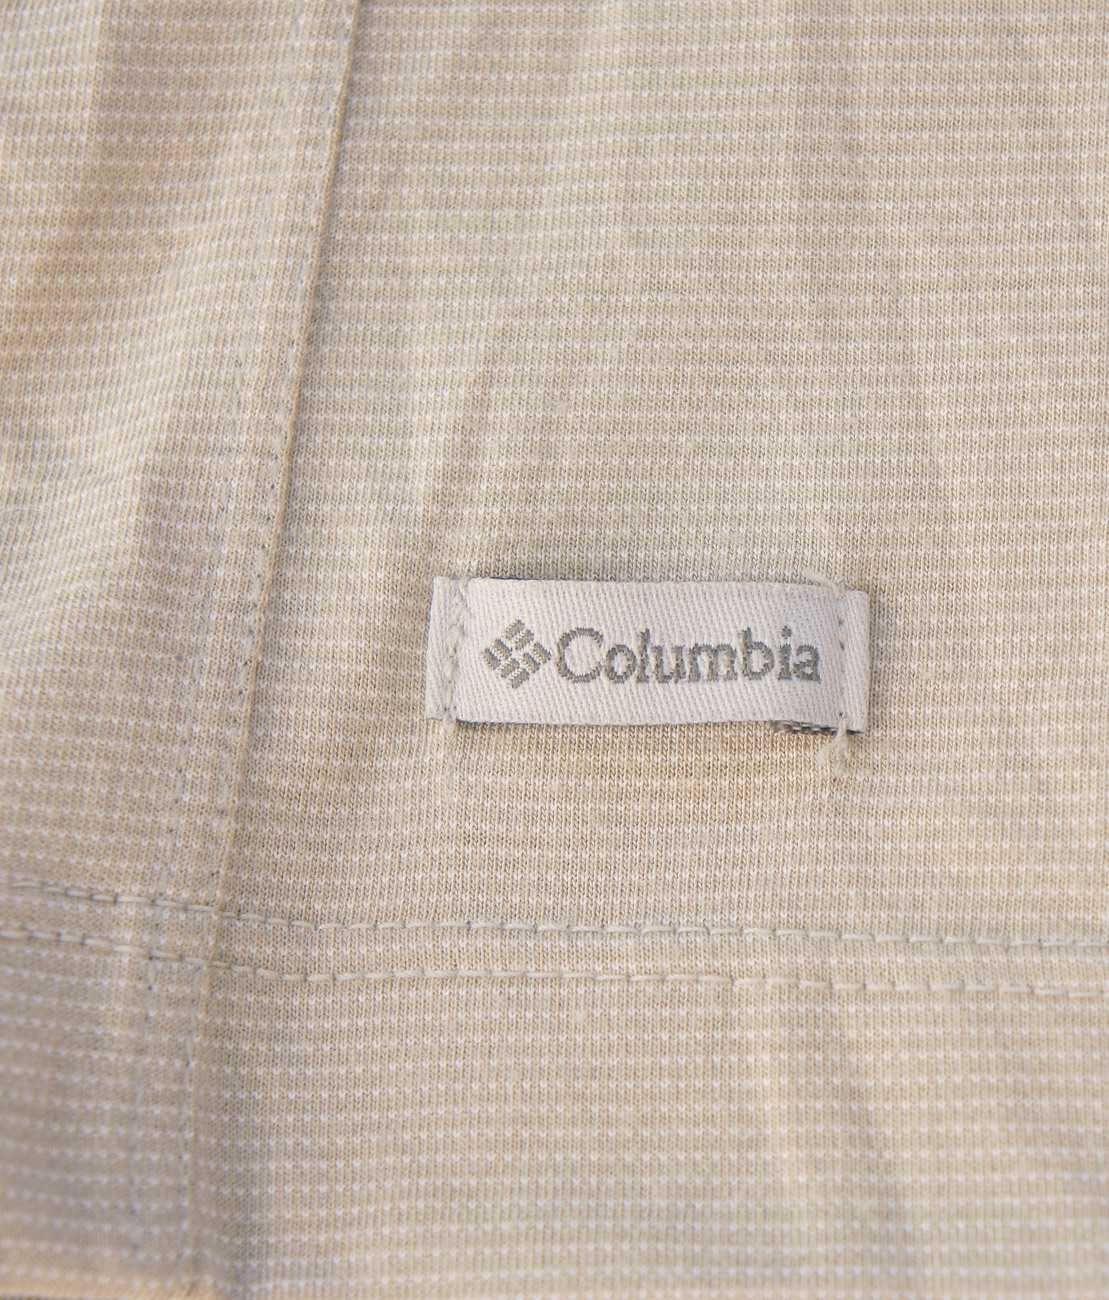 Женская футболка Columbia Titanium Omni Shade без рукавов дышащая